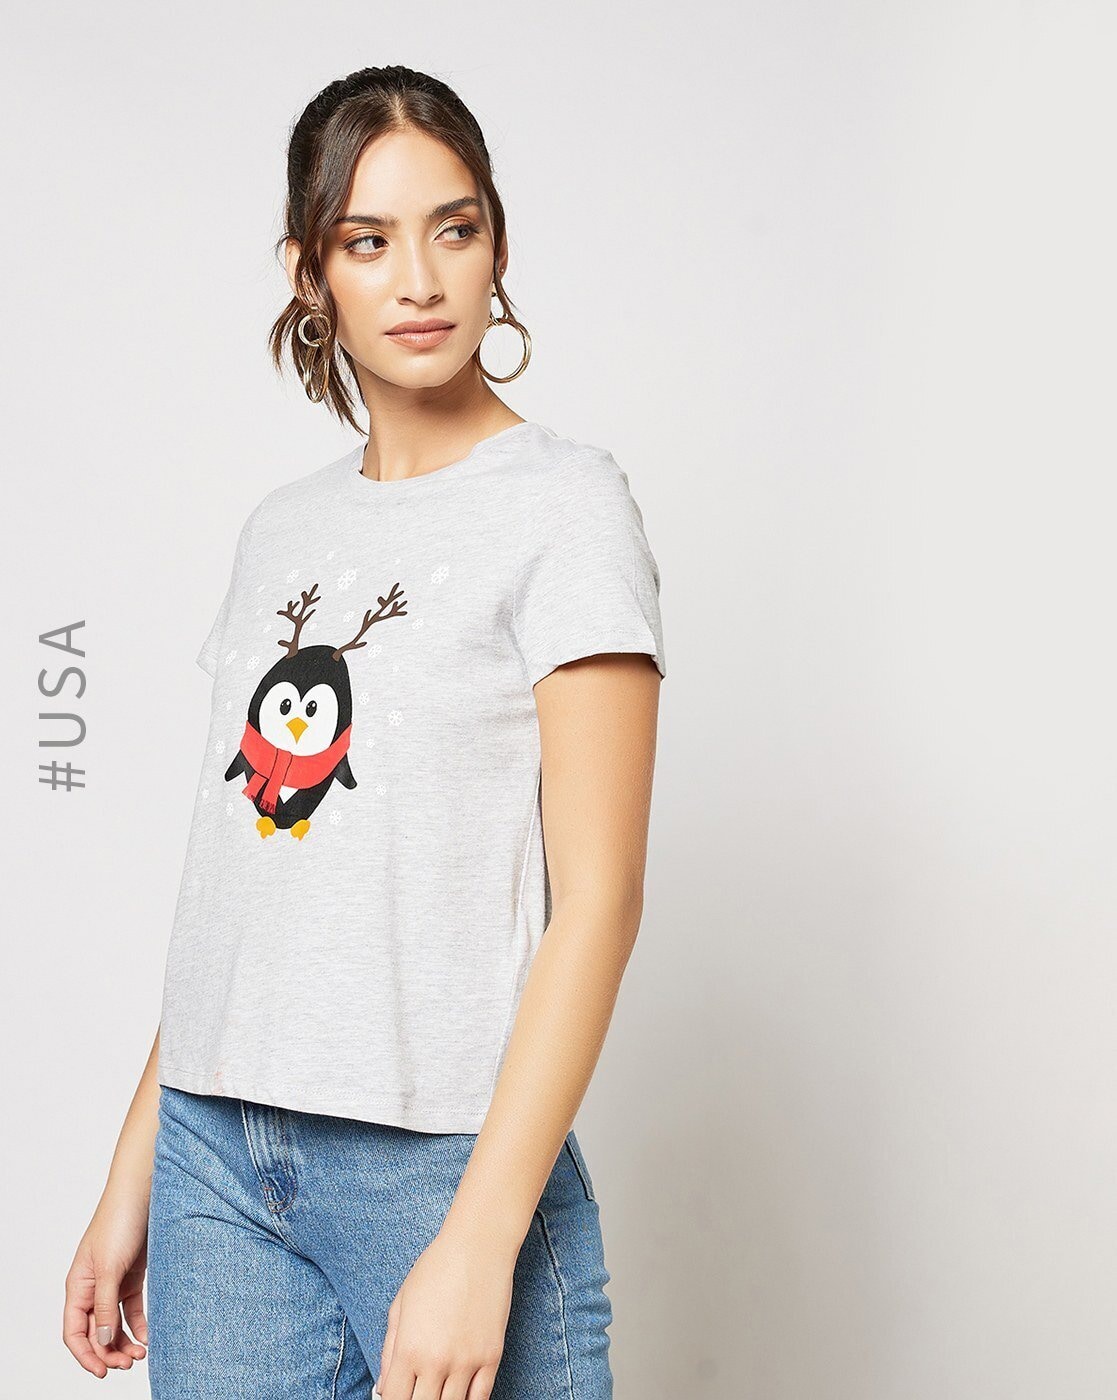 Women's shirt with penguin print